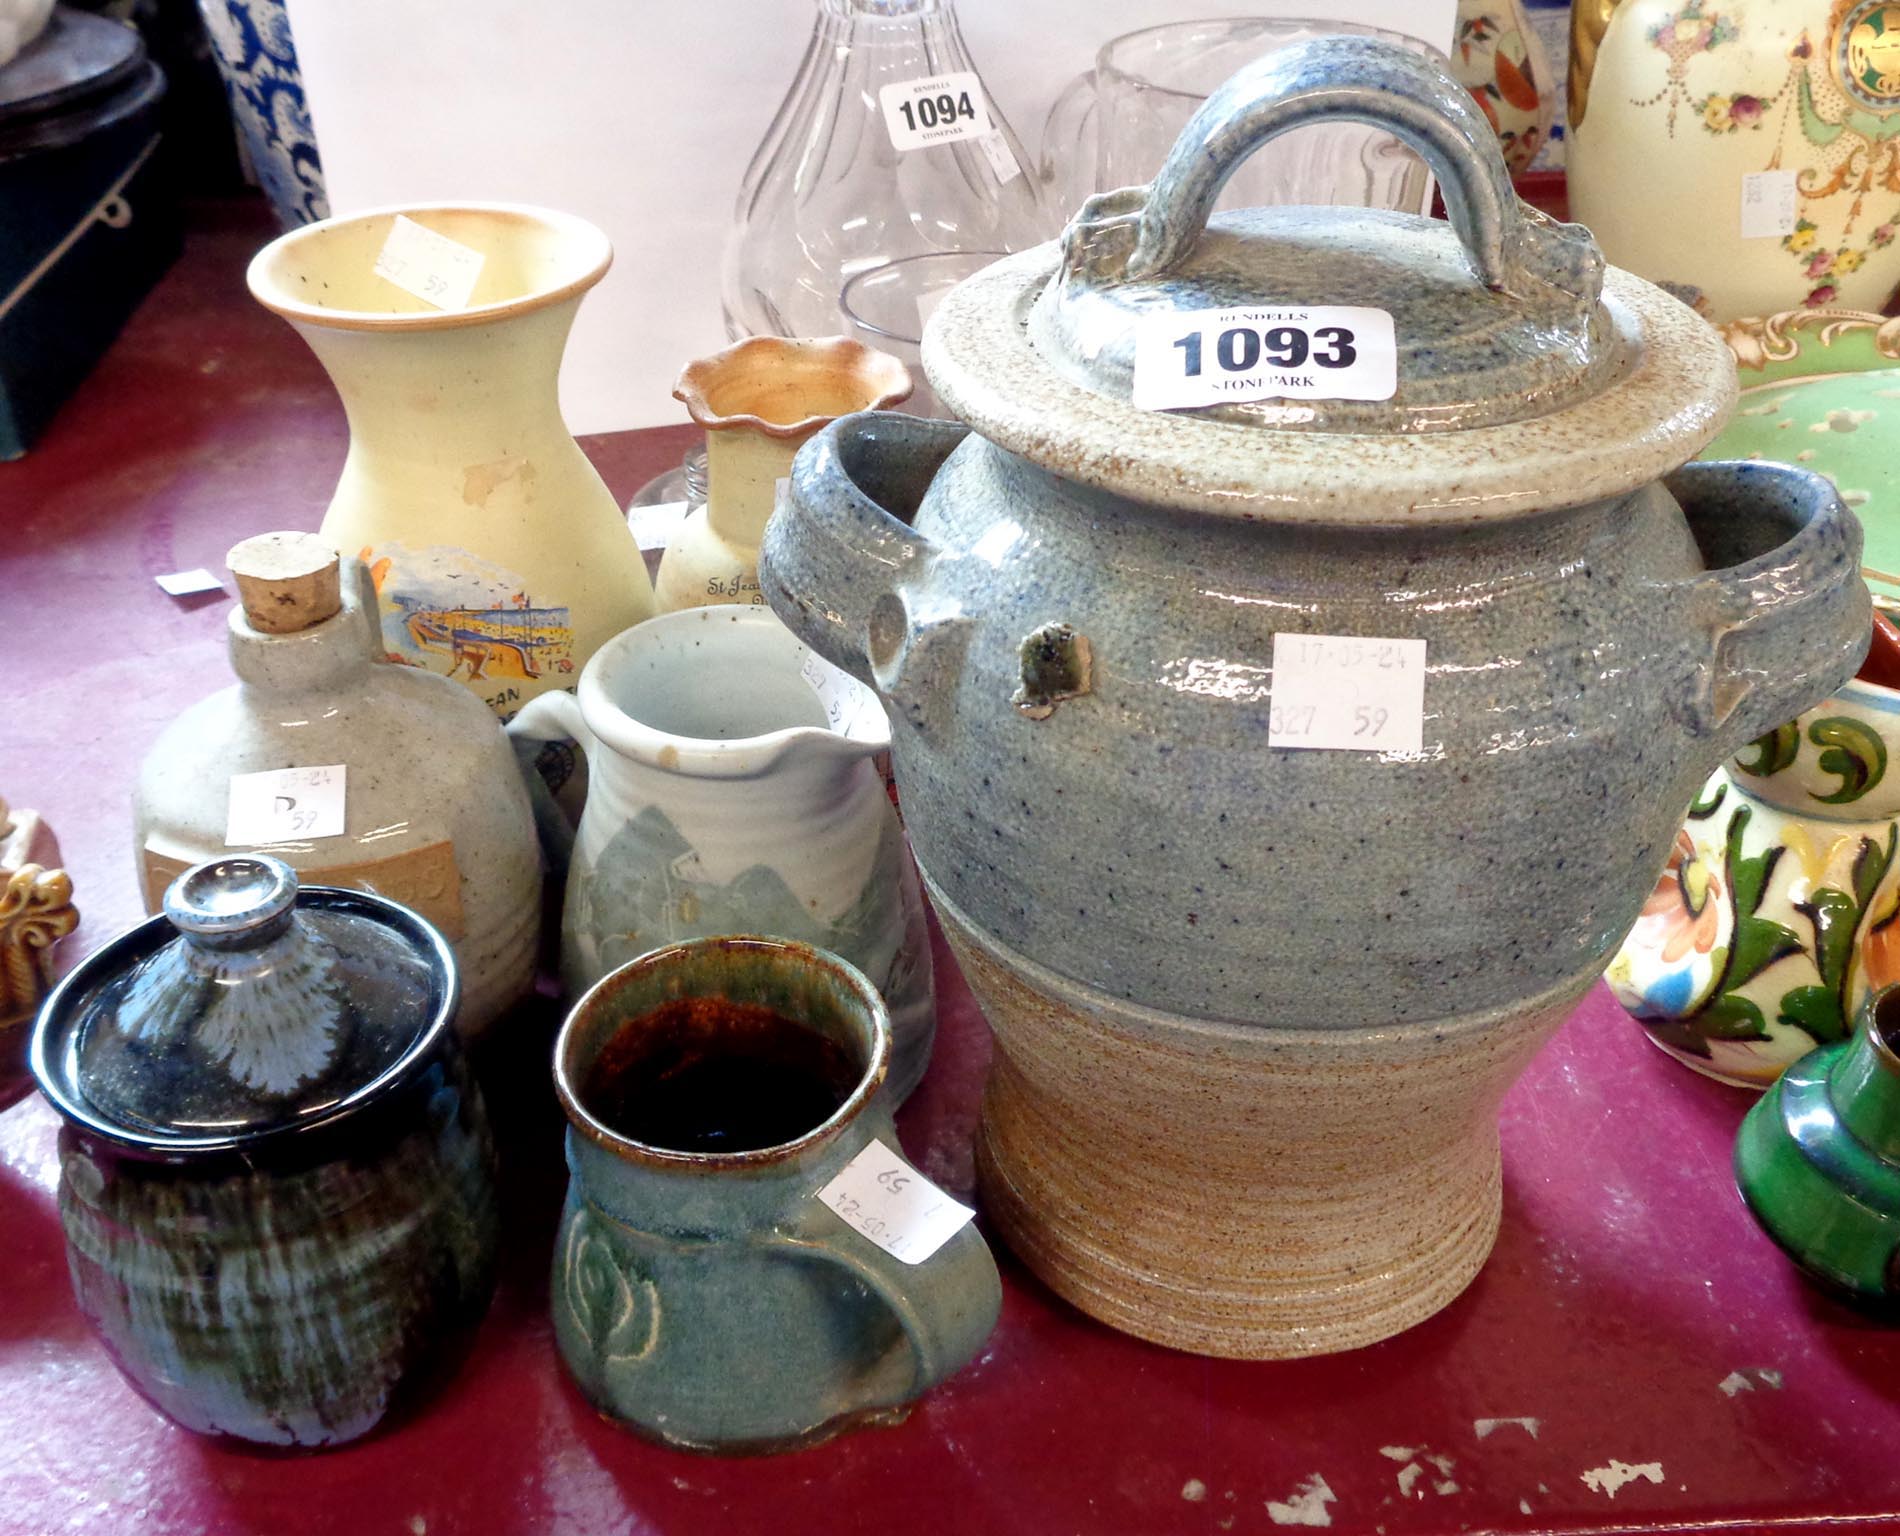 A quantity of Studio Pottery including jugs, vases, etc.